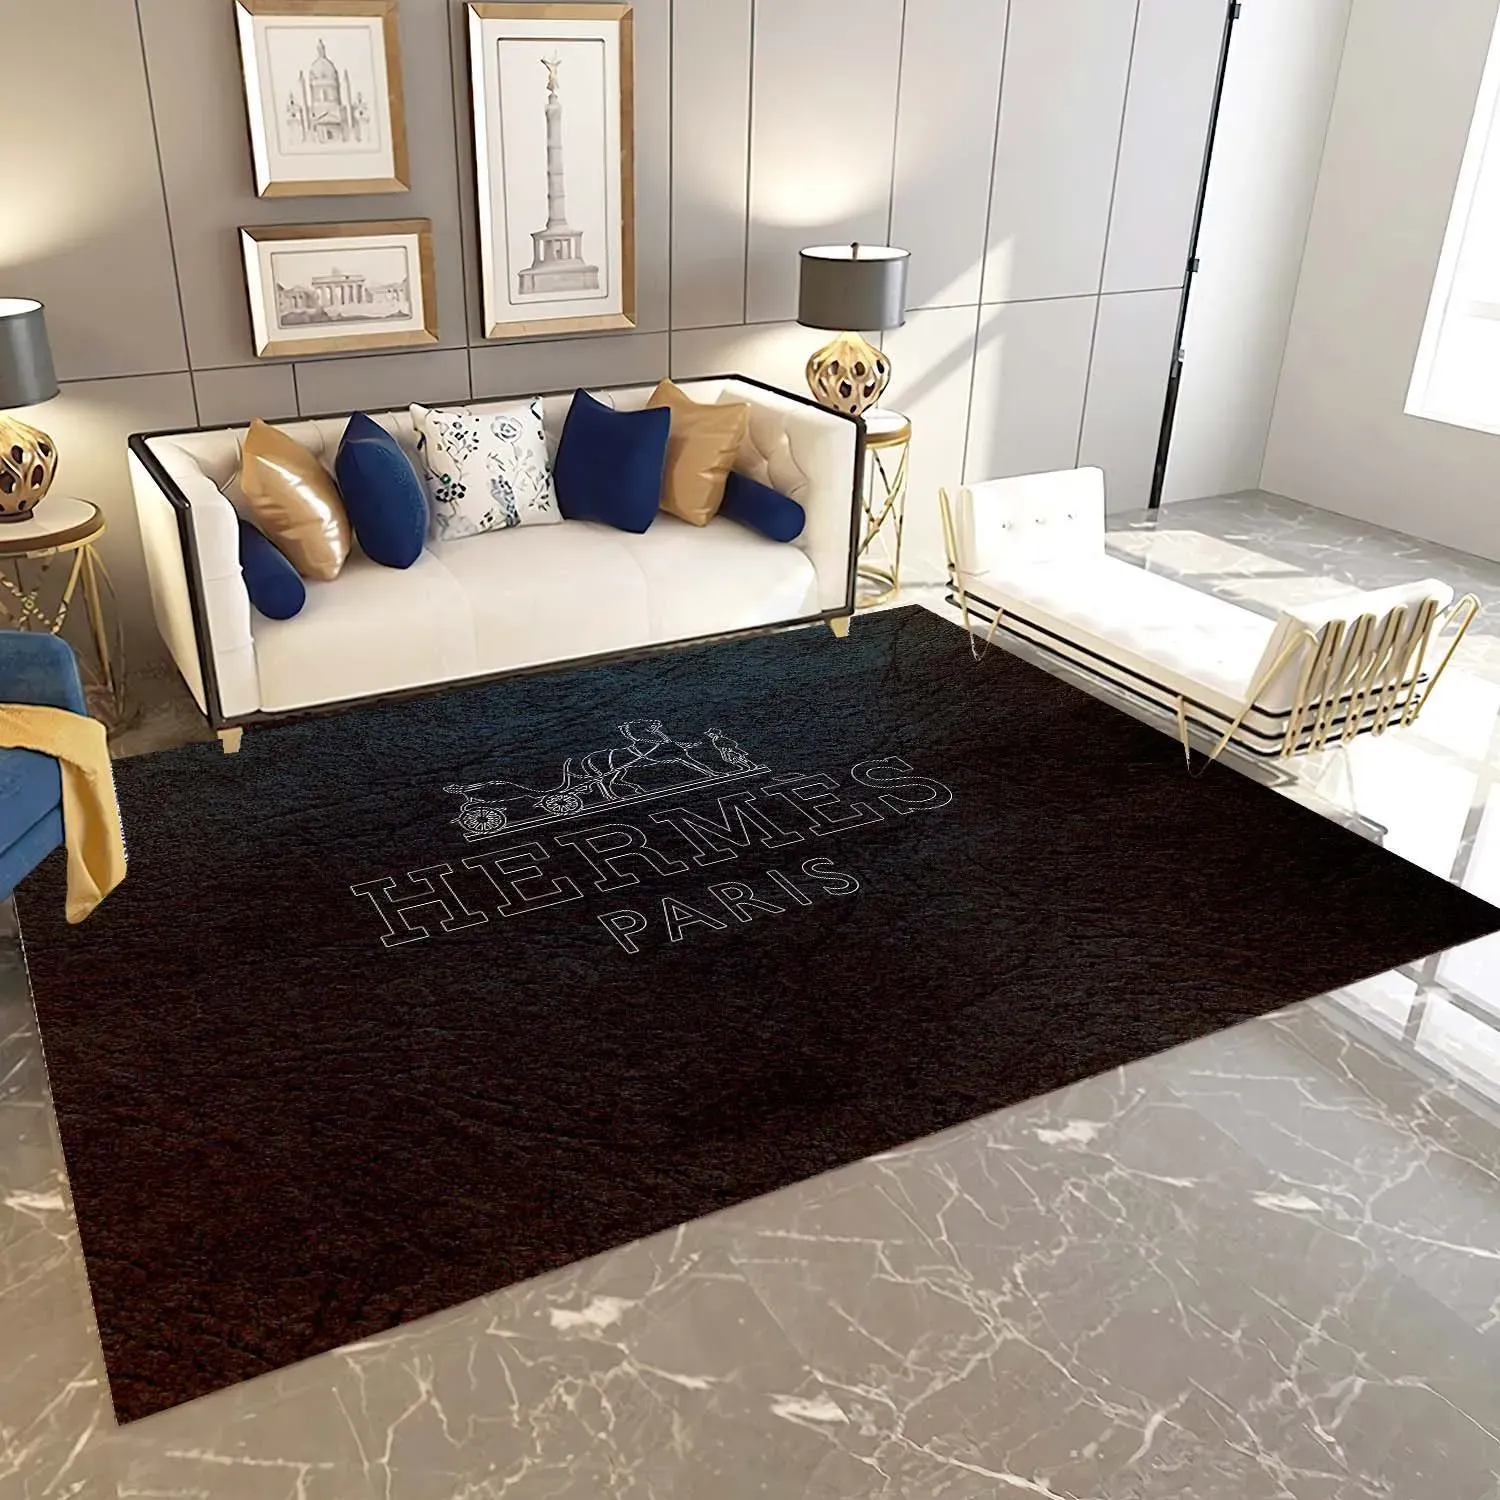 Hermes Rectangle Rug Home Decor Area Carpet Luxury Door Mat Fashion Brand